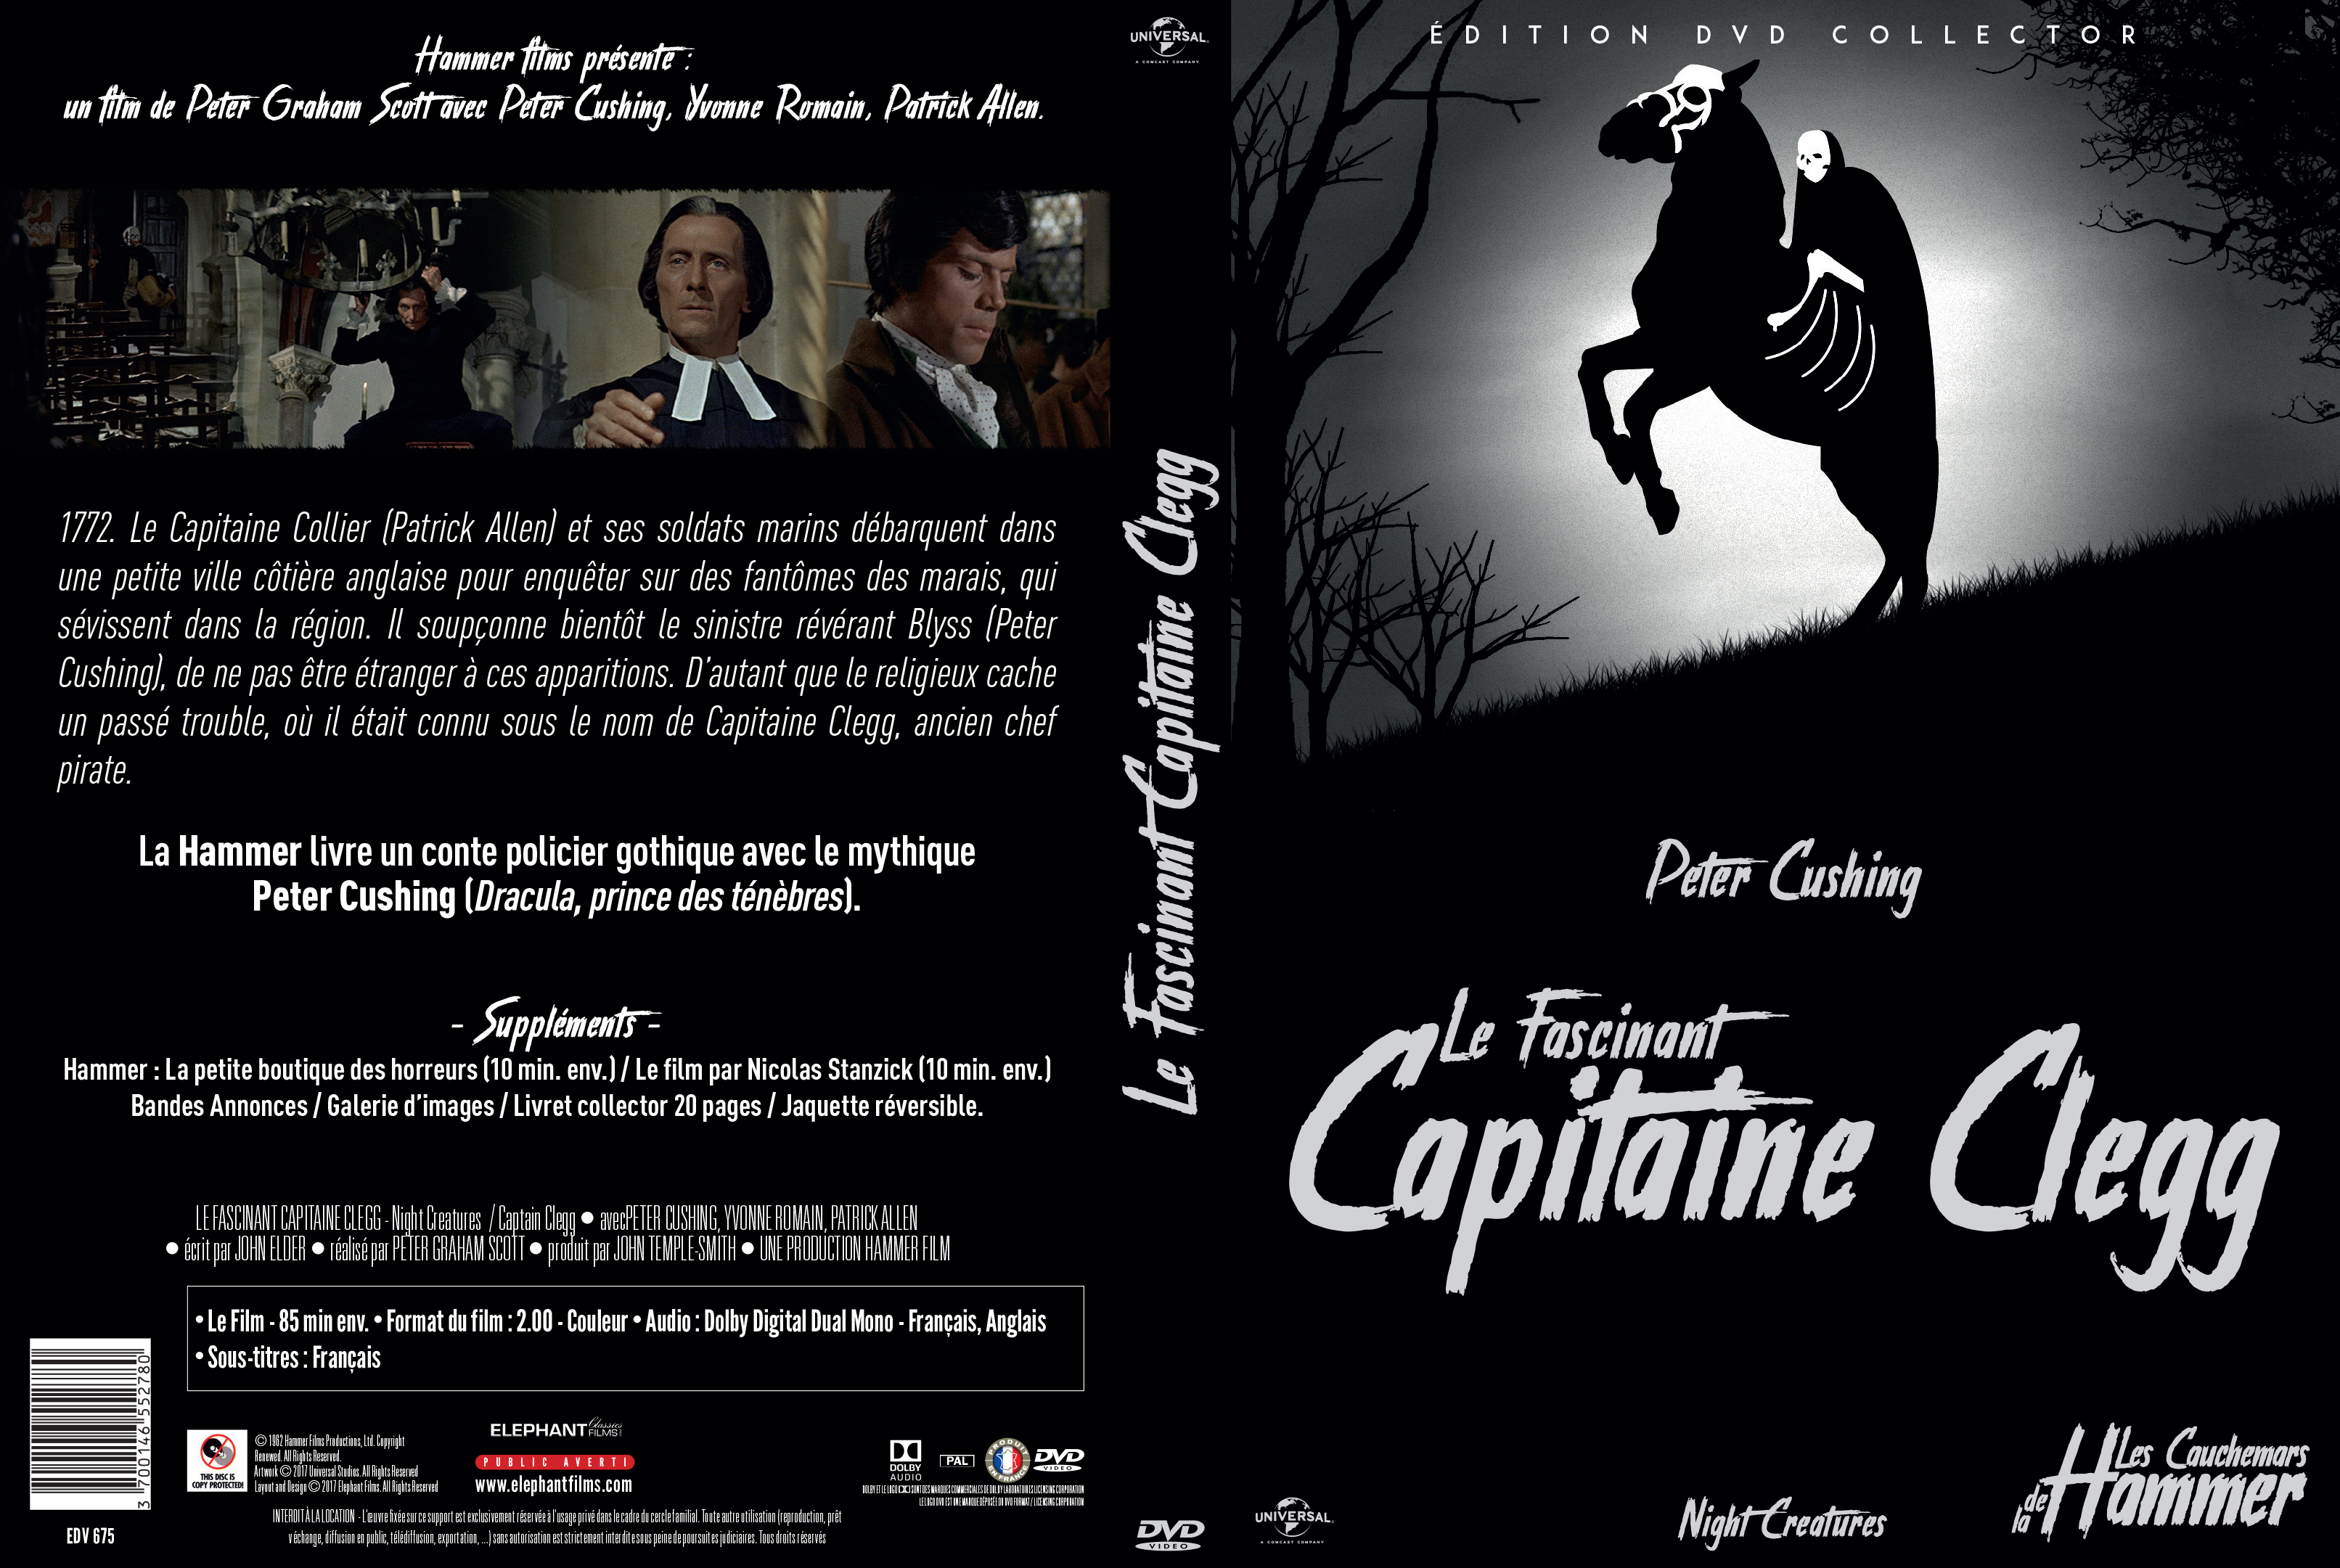 Jaquette DVD Le fascinant capitaine Clegg custom v3